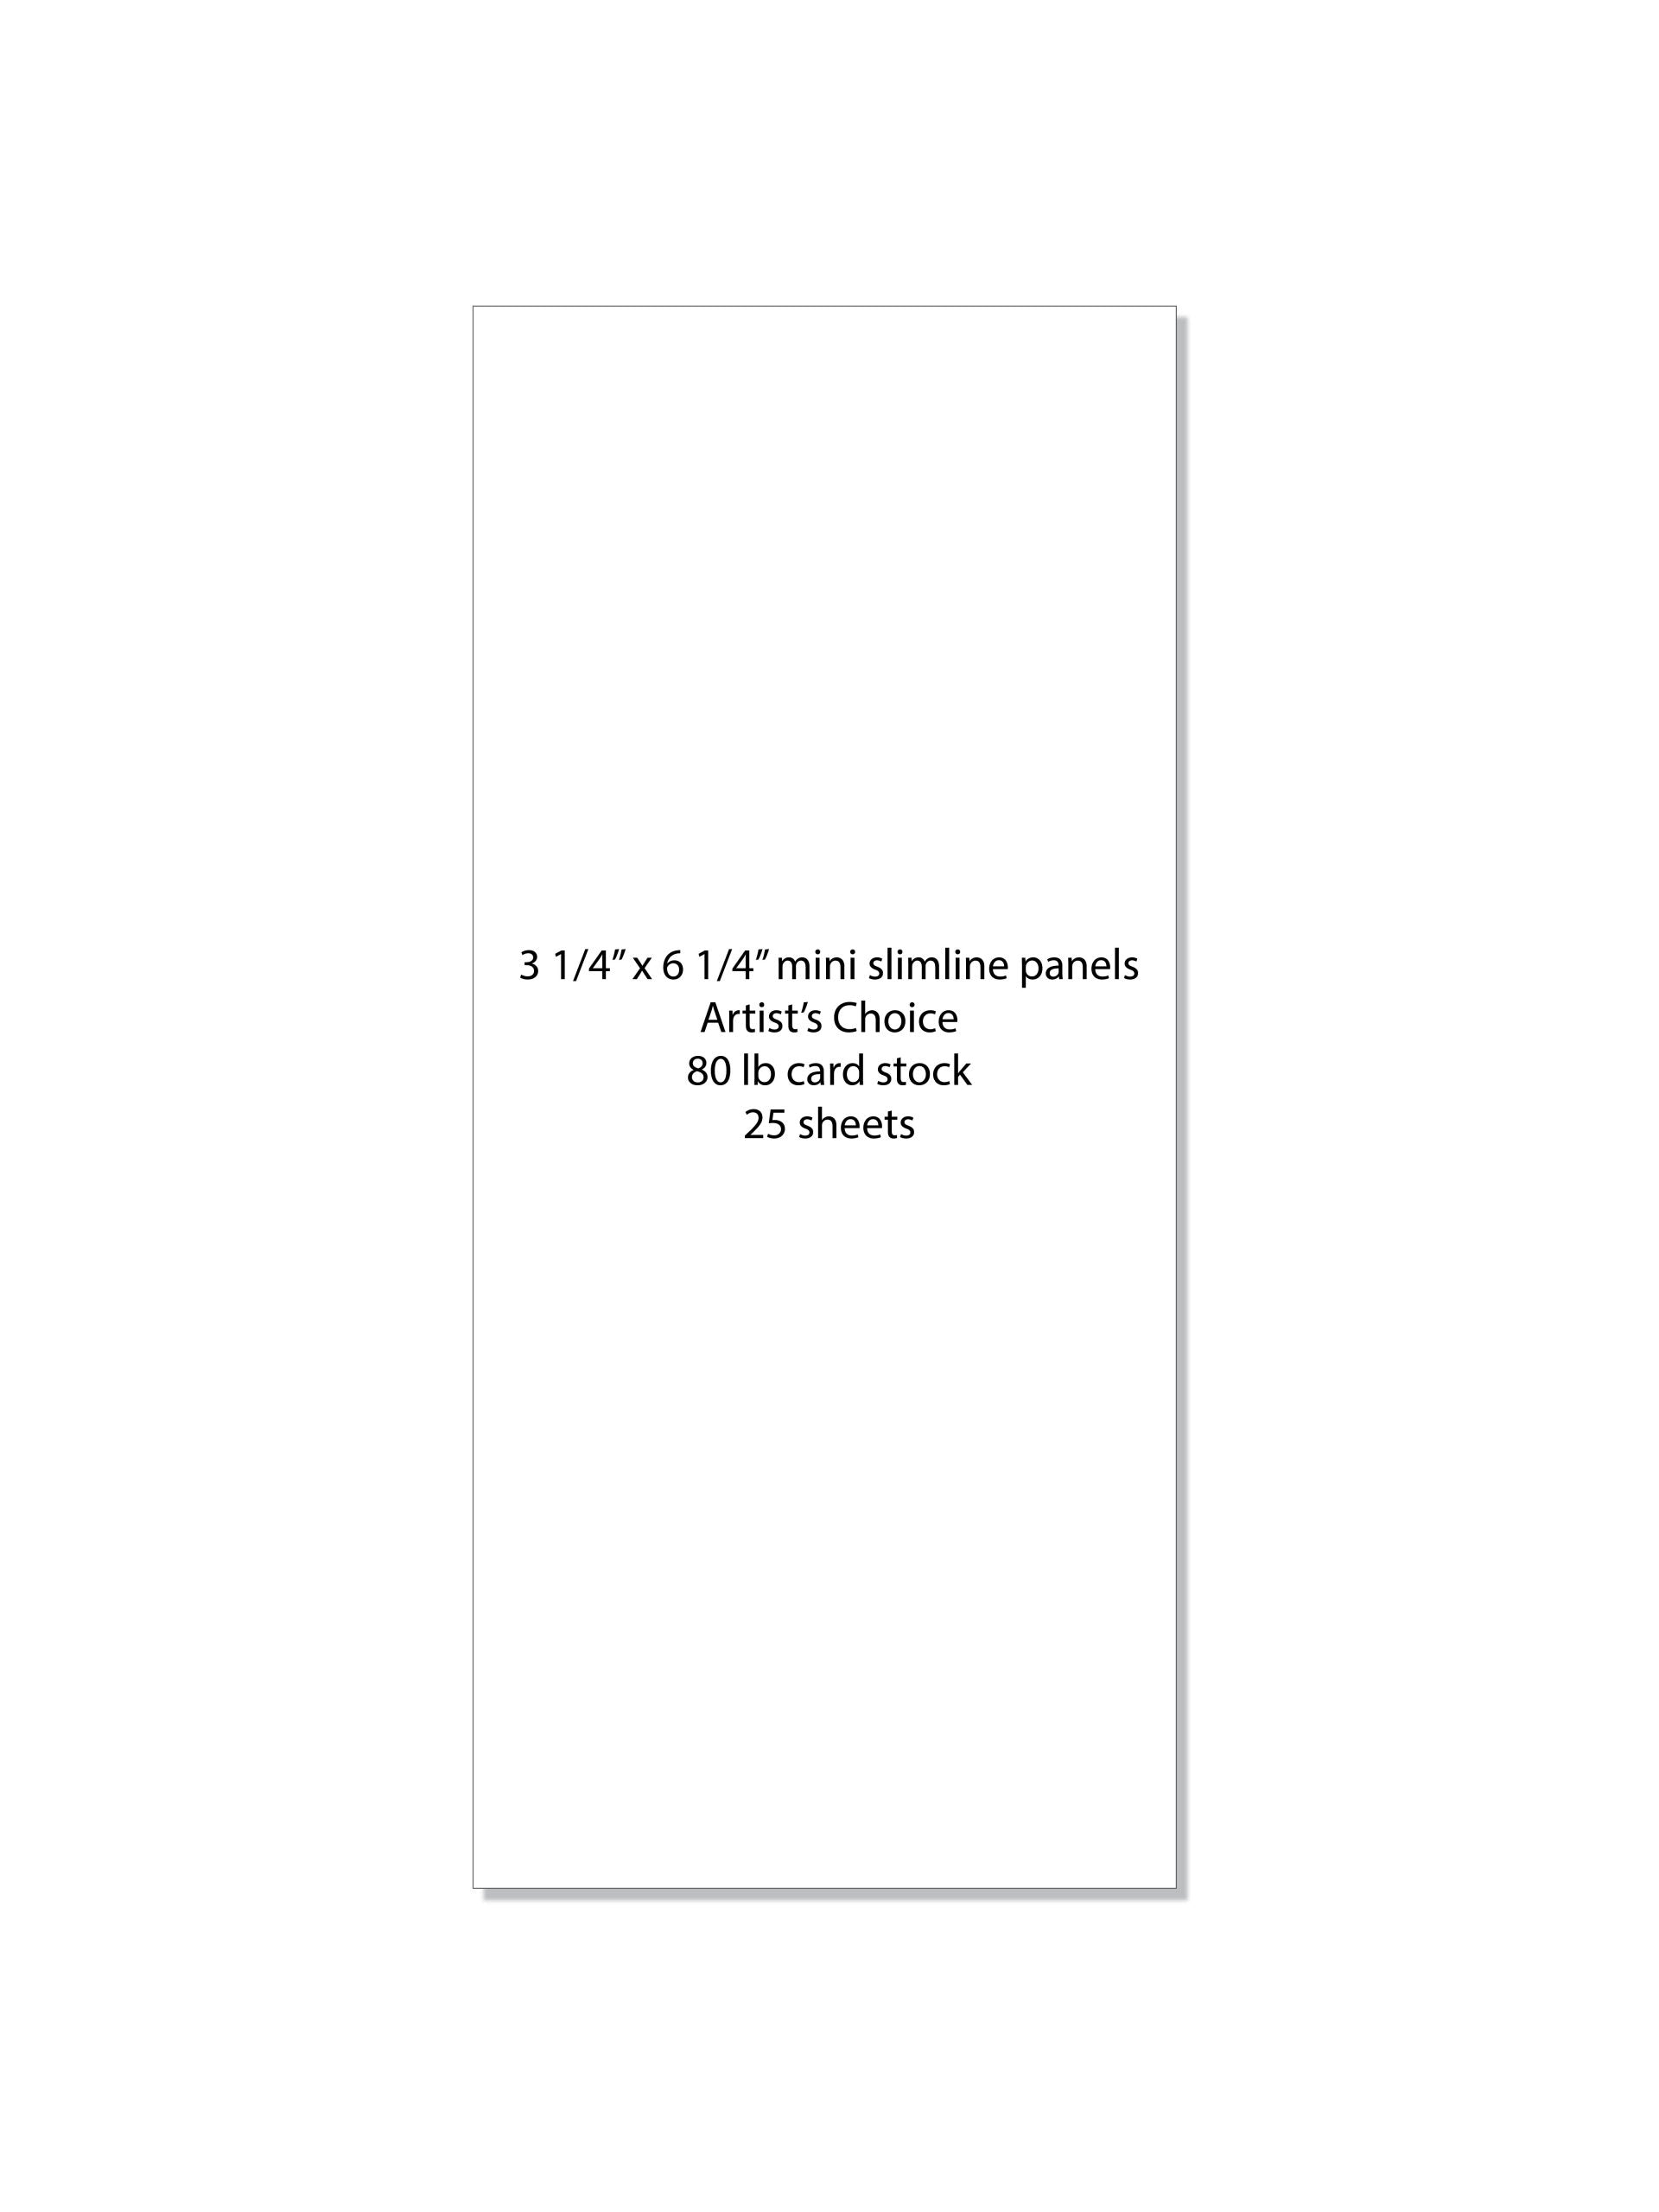 CARD STOCK PANELS- Artist's Choice Layering Weight MINI Slimline 3